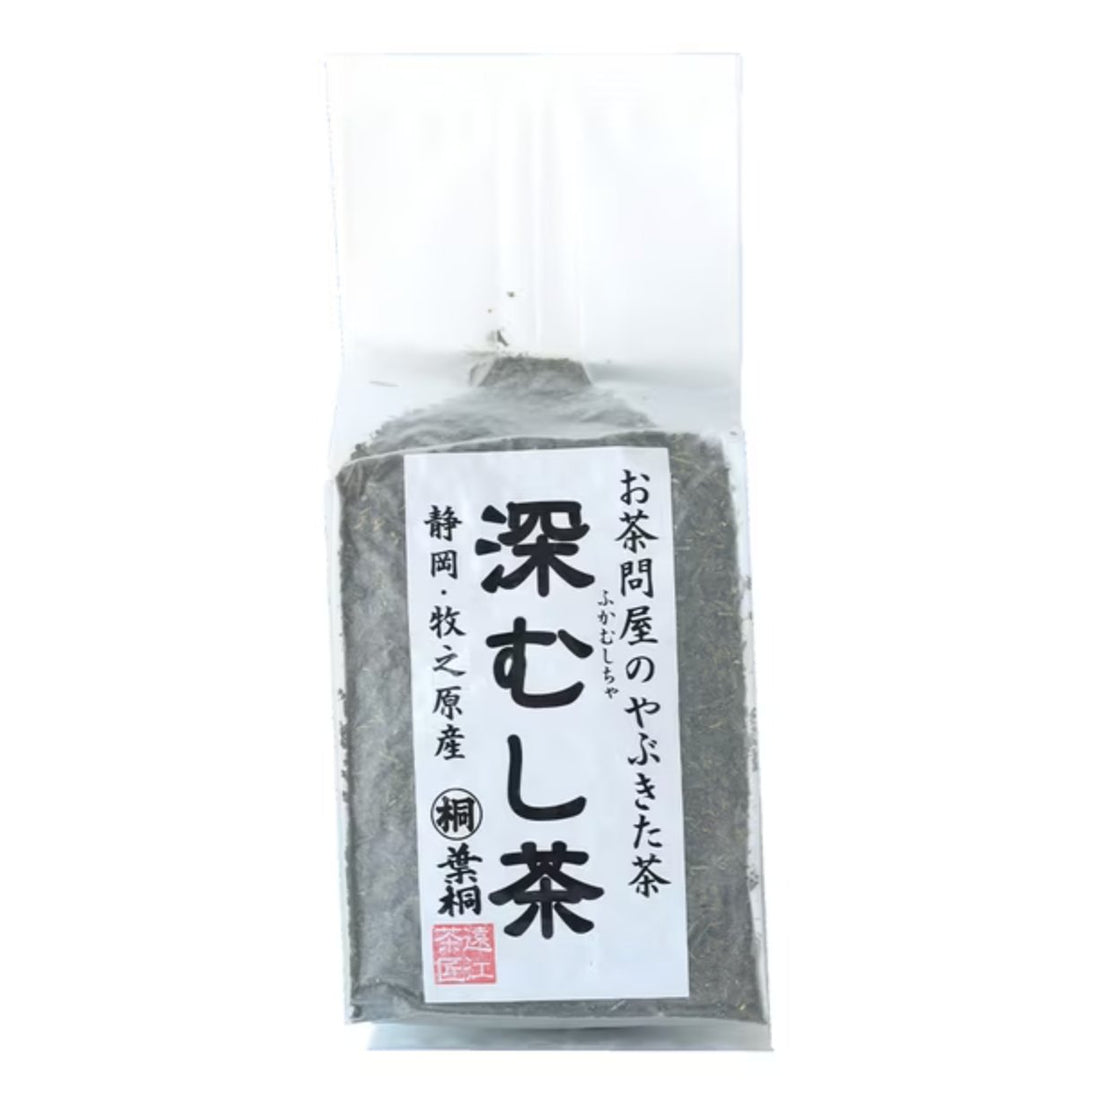 Hagiri Yabukita deep steamed tea 500g - NihonMura